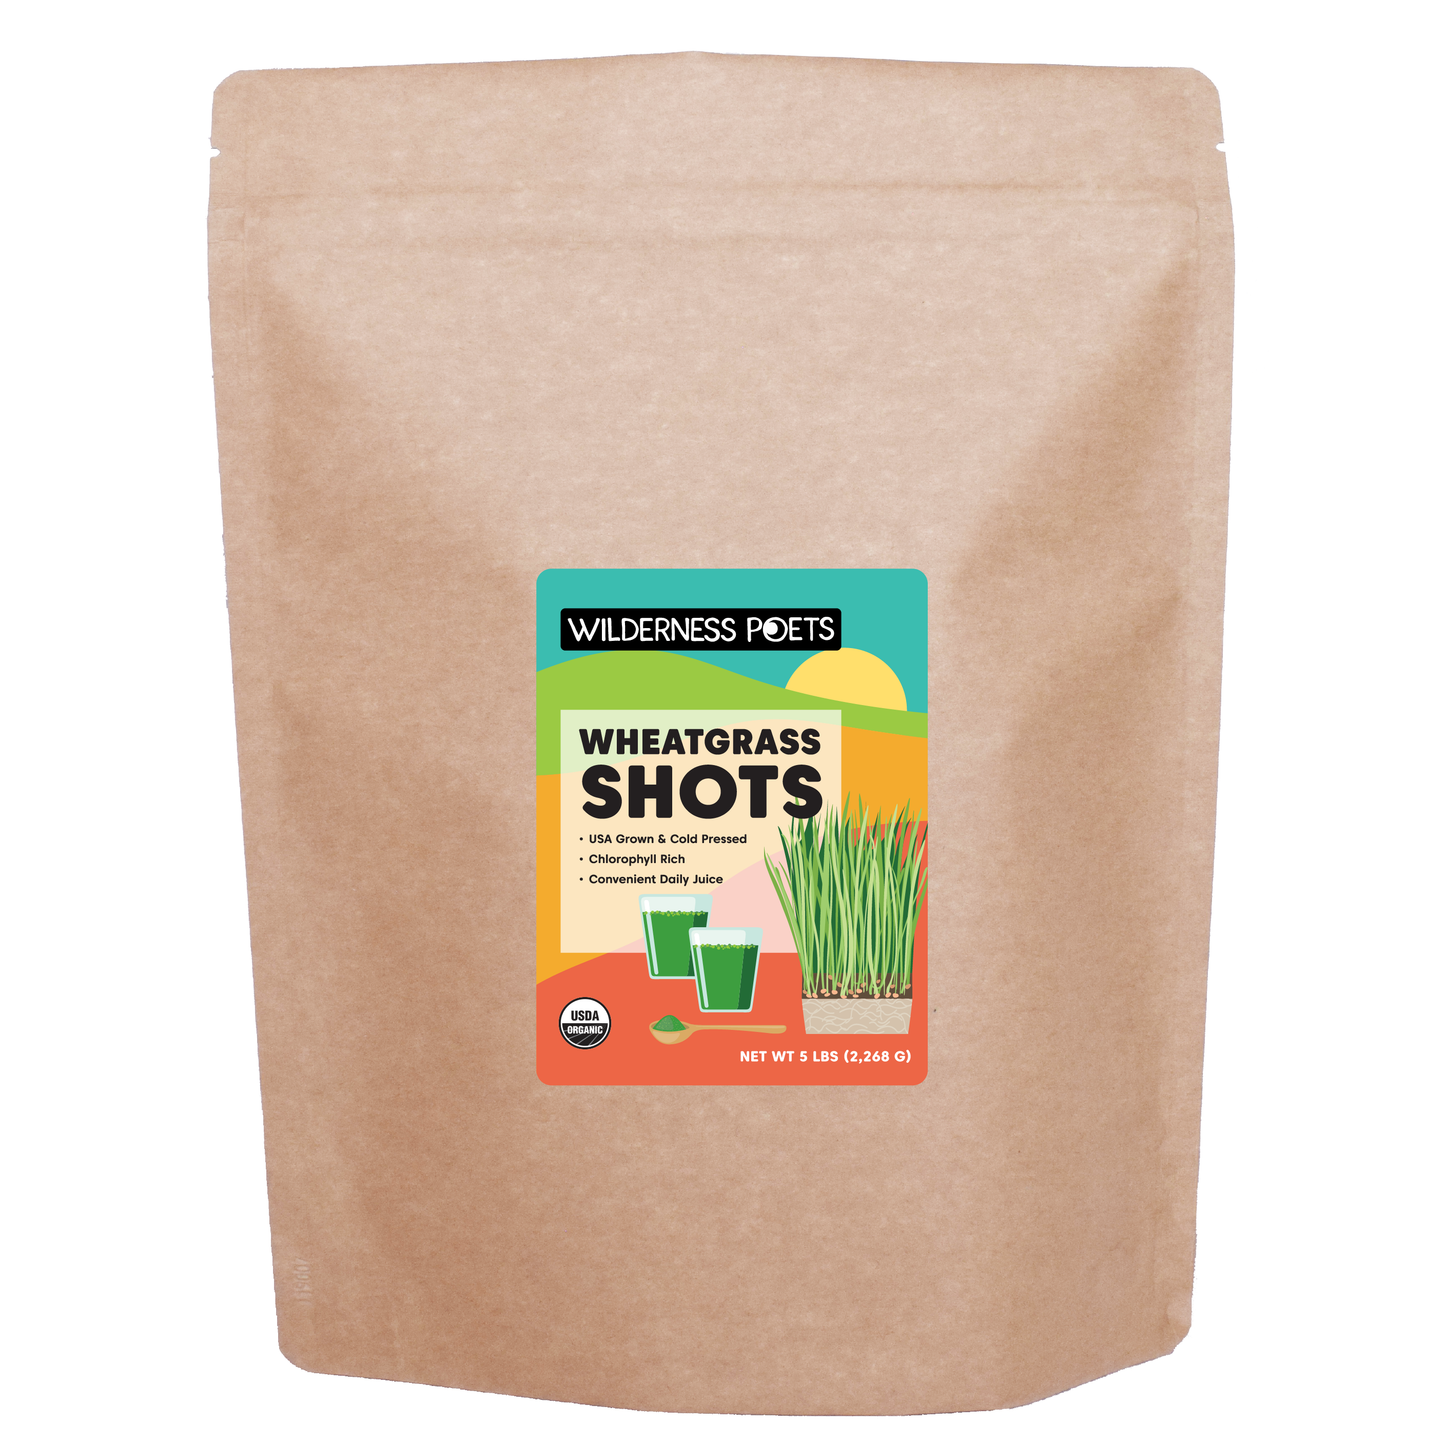 Wheatgrass Shots - Juice Powder, Organic and Raw, US-Grown